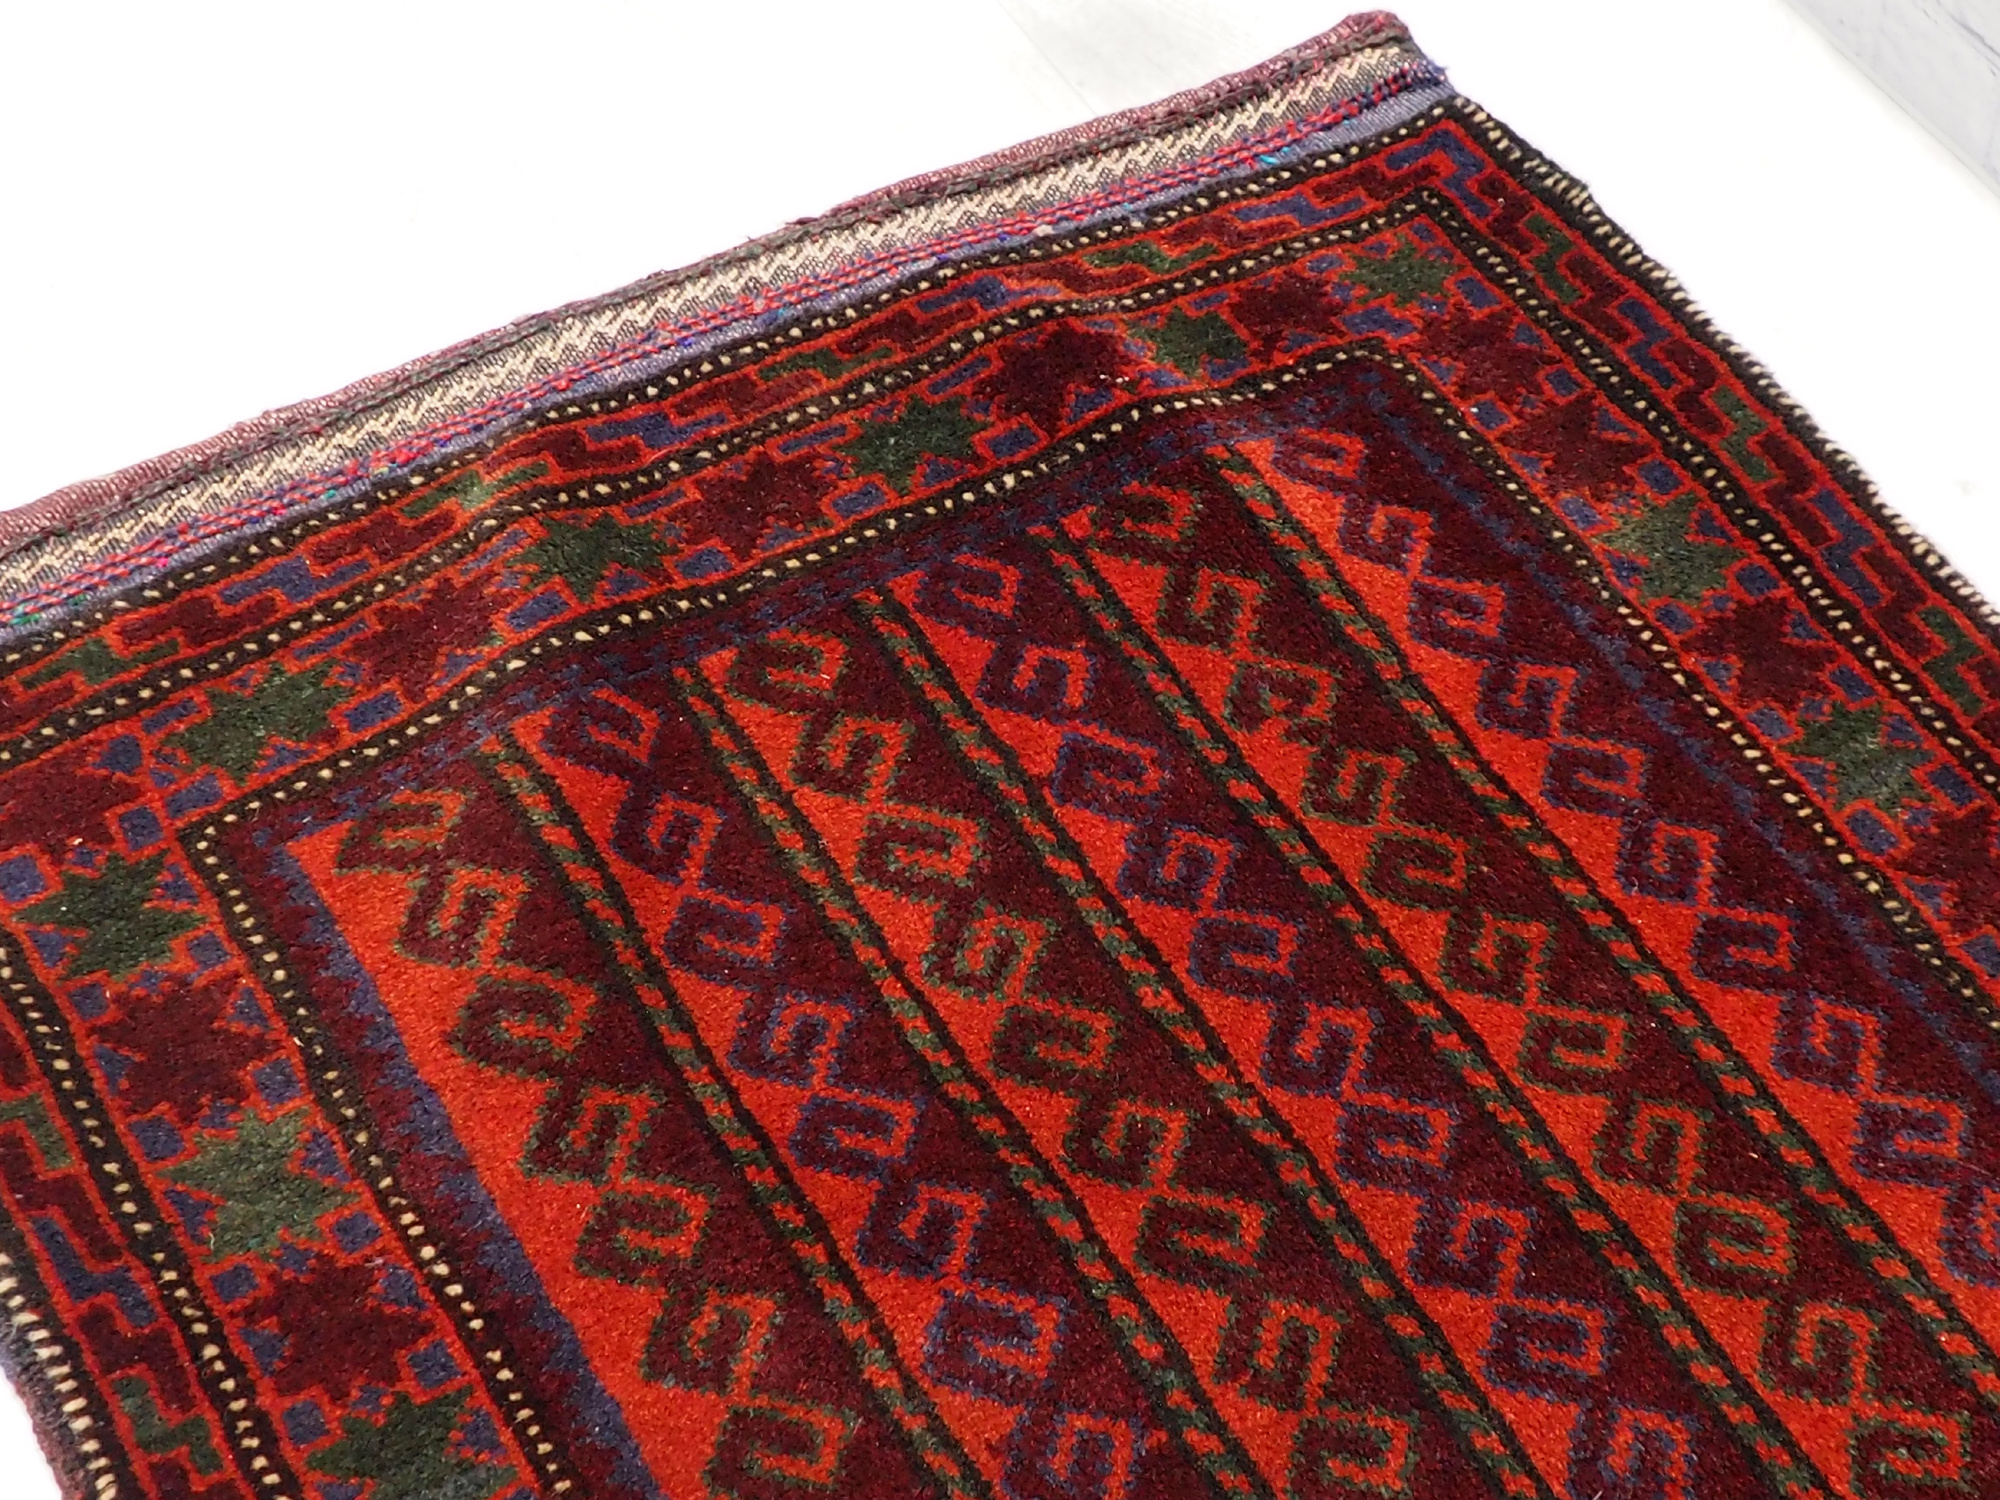 104x62 cm  (40,9" x 24,4" inch) antique orient Afghan Beloch nomad rug seat floor cushion Bohemian pillow 1001 night  No:22/ 5